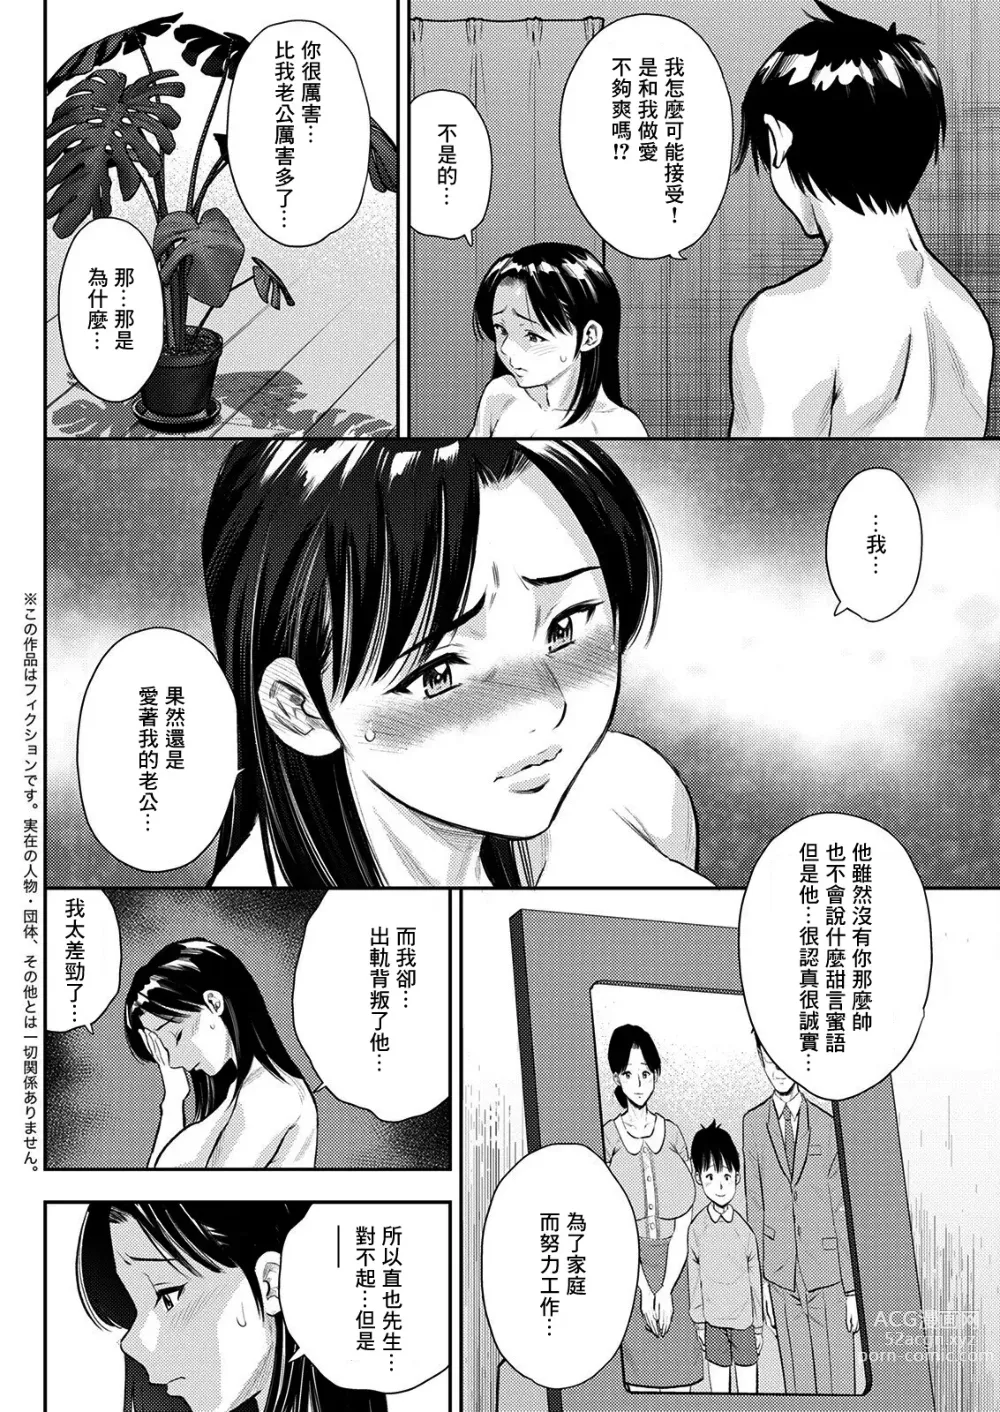 Page 2 of manga 智代小姐的危險遊戲 中篇